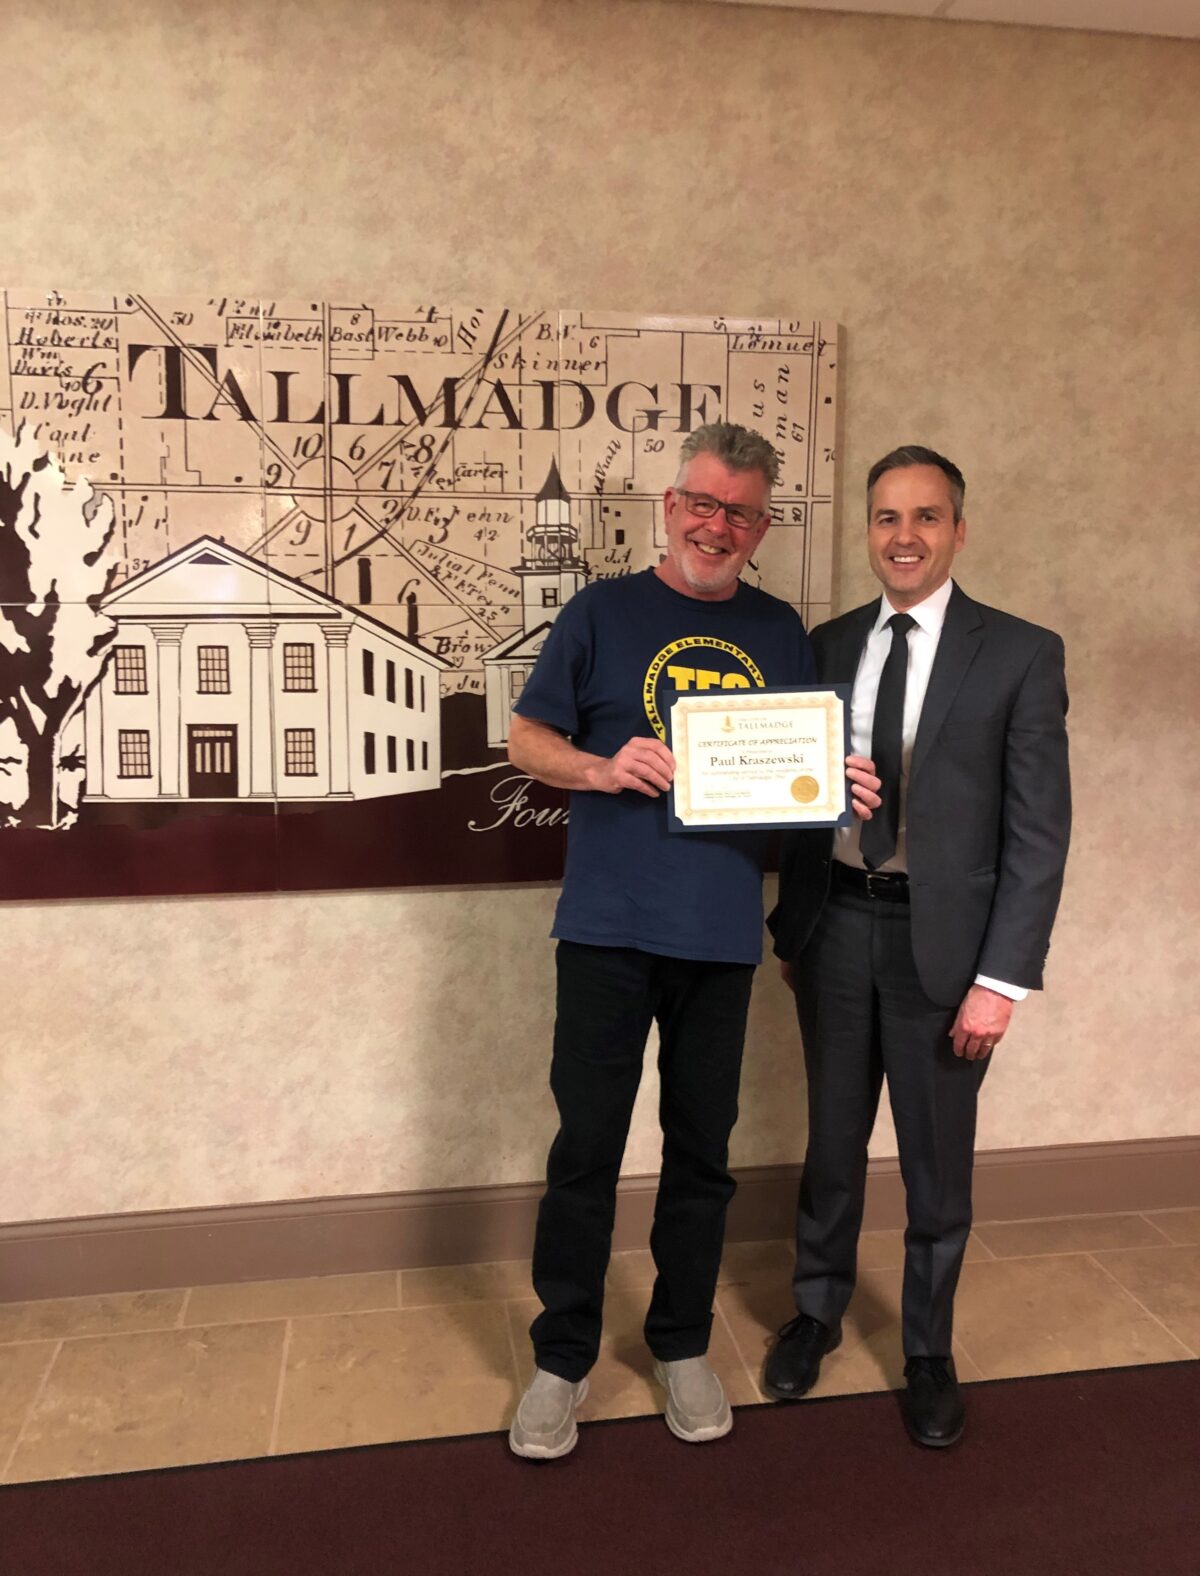 Petermann Bus Driver Paul Kraszewski Recognized for Excellent Service by the City of Tallmadge, Ohio